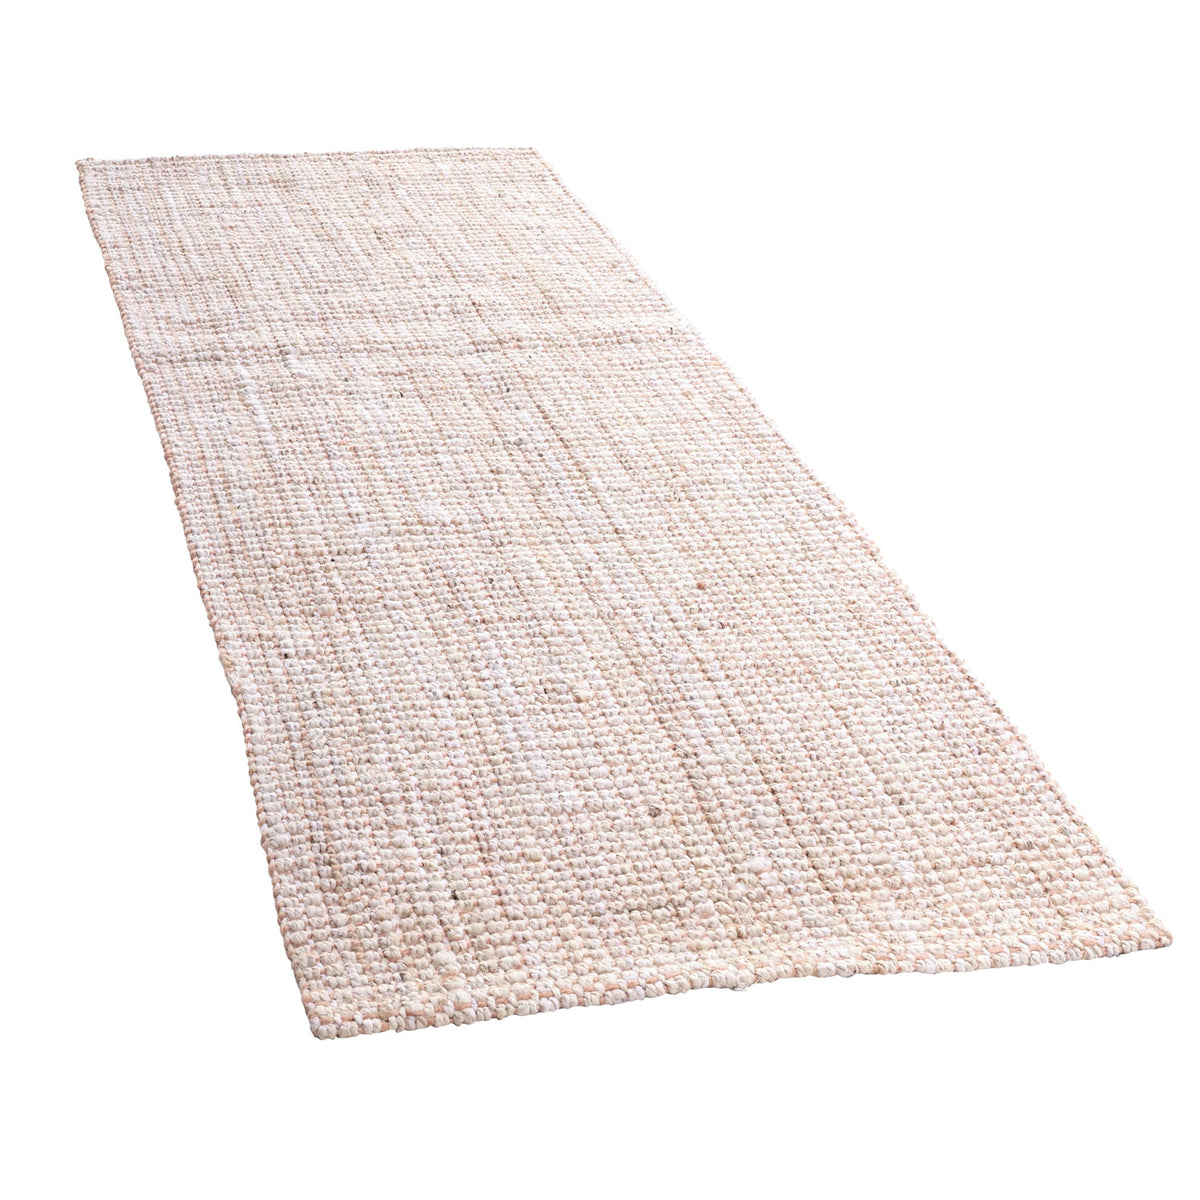 OnlyMat Pink and White Jute Runner Rug Eco-Friendly Handwoven Carpet for Bedside Living Room Decor